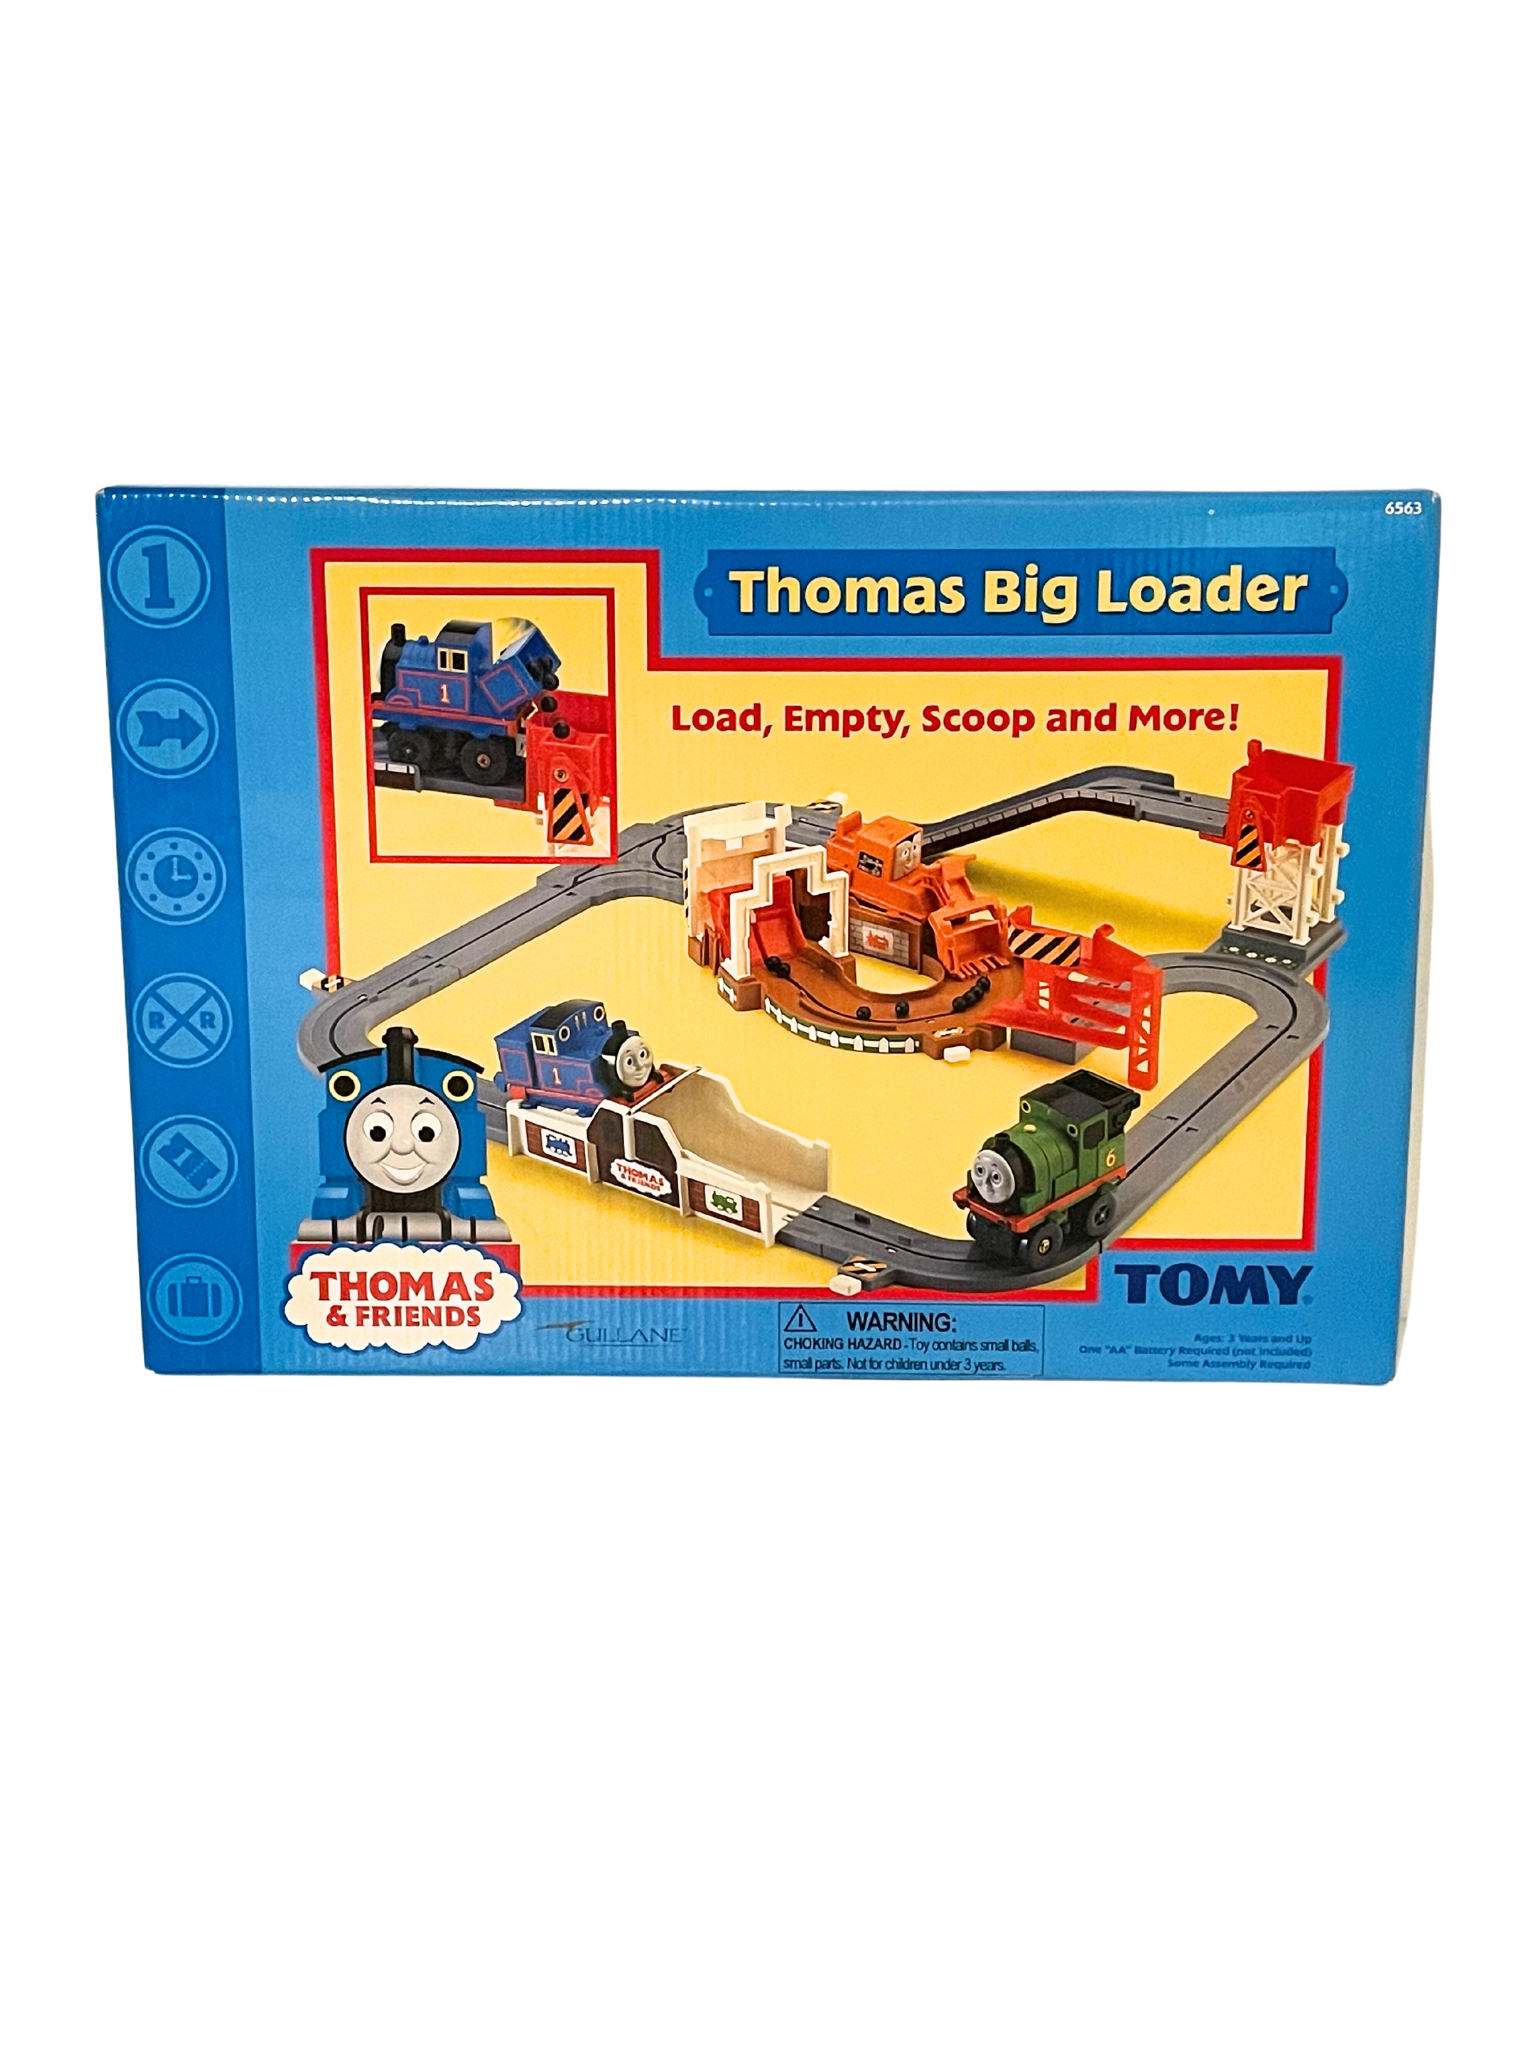 Tomy 2001 Thomas & Friends, Thomas Big Loader Factory Sealed 6563